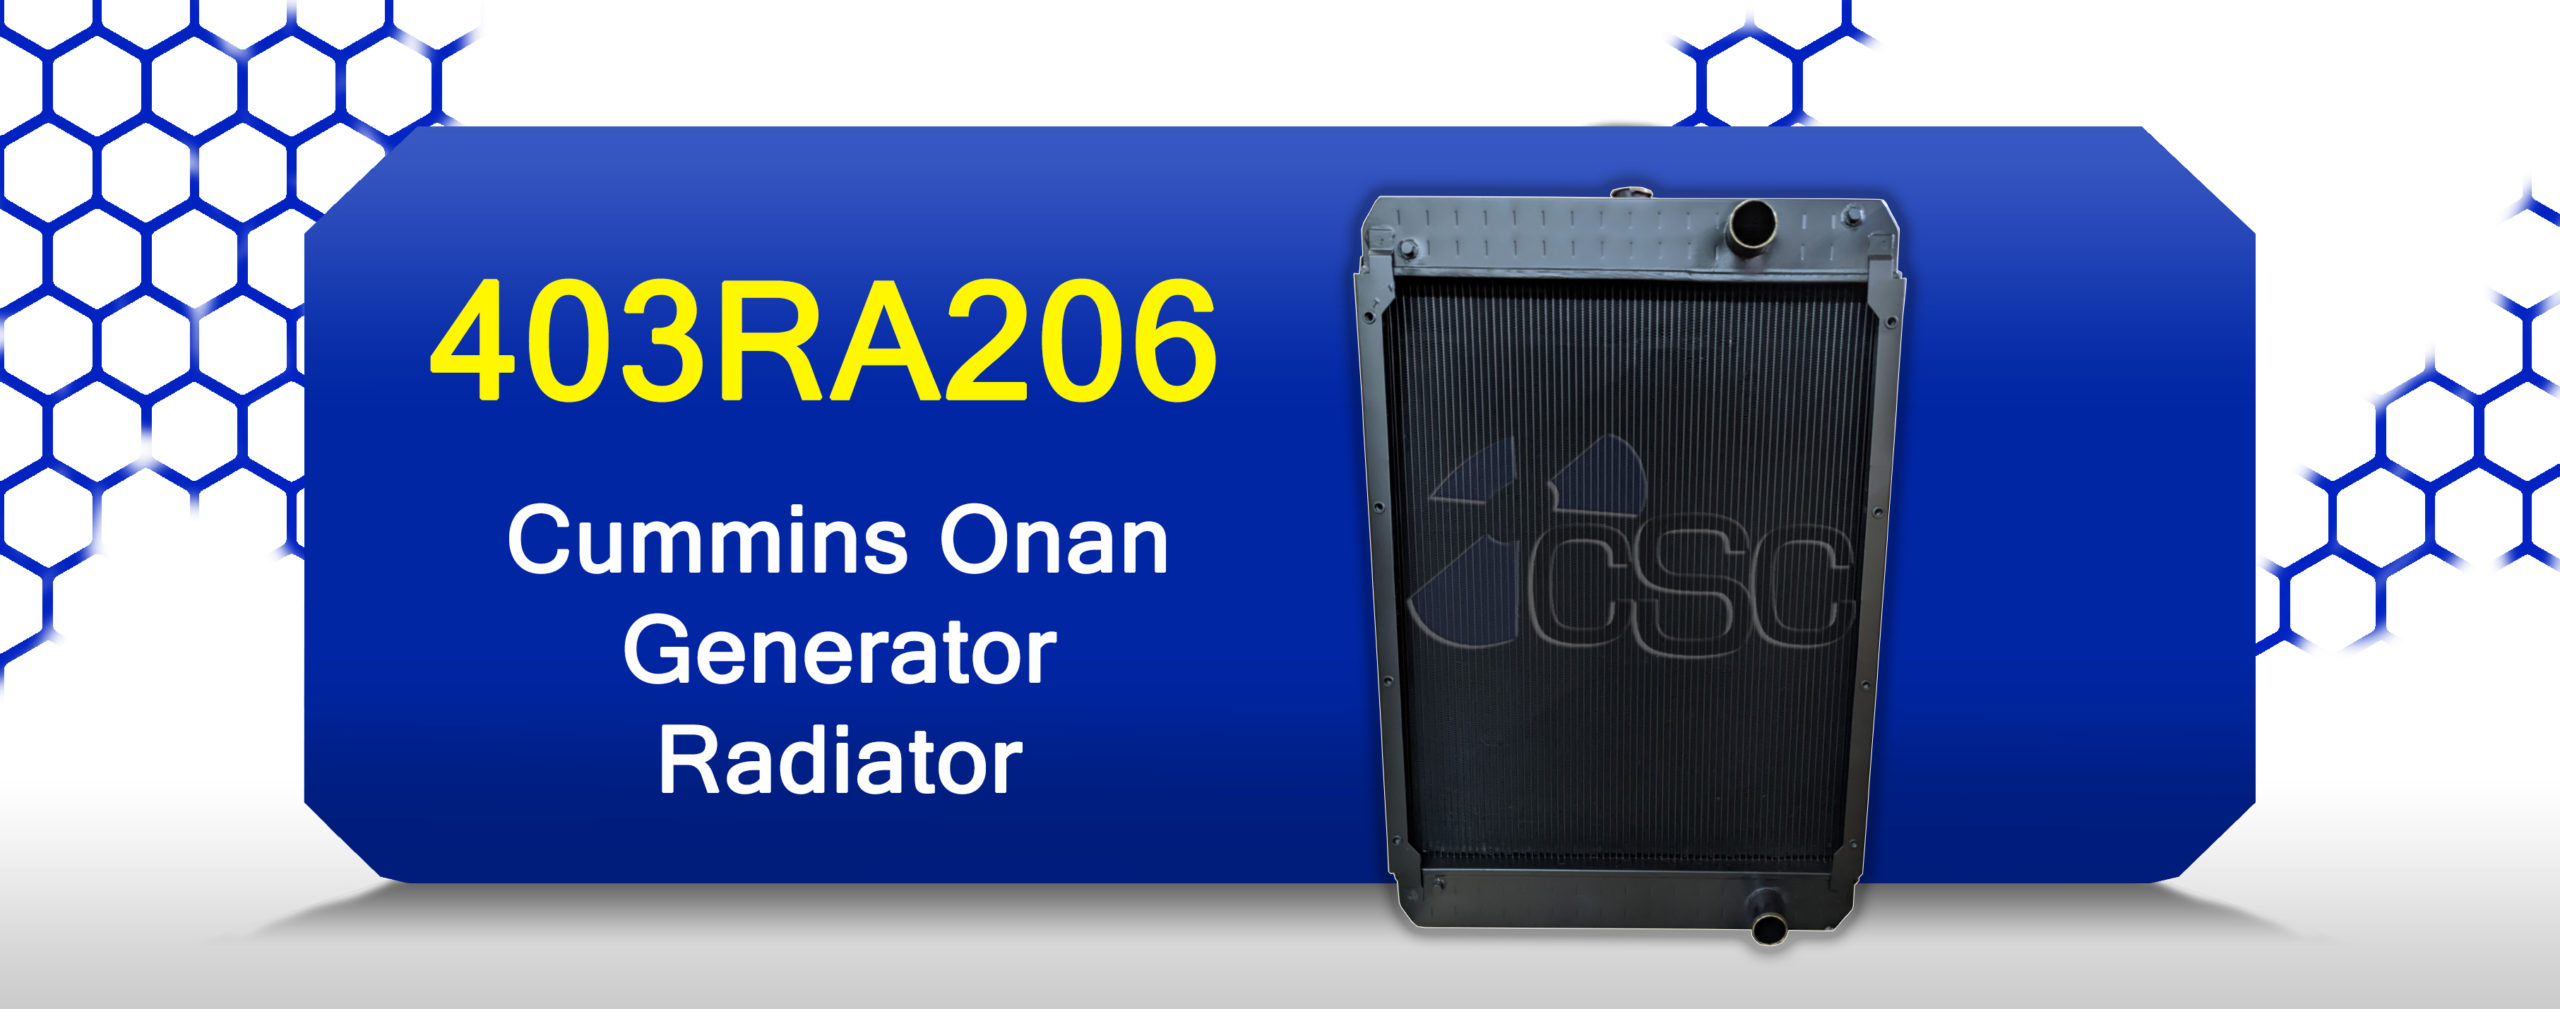 403RA206 radiator for 150kw Cummins Onan generator